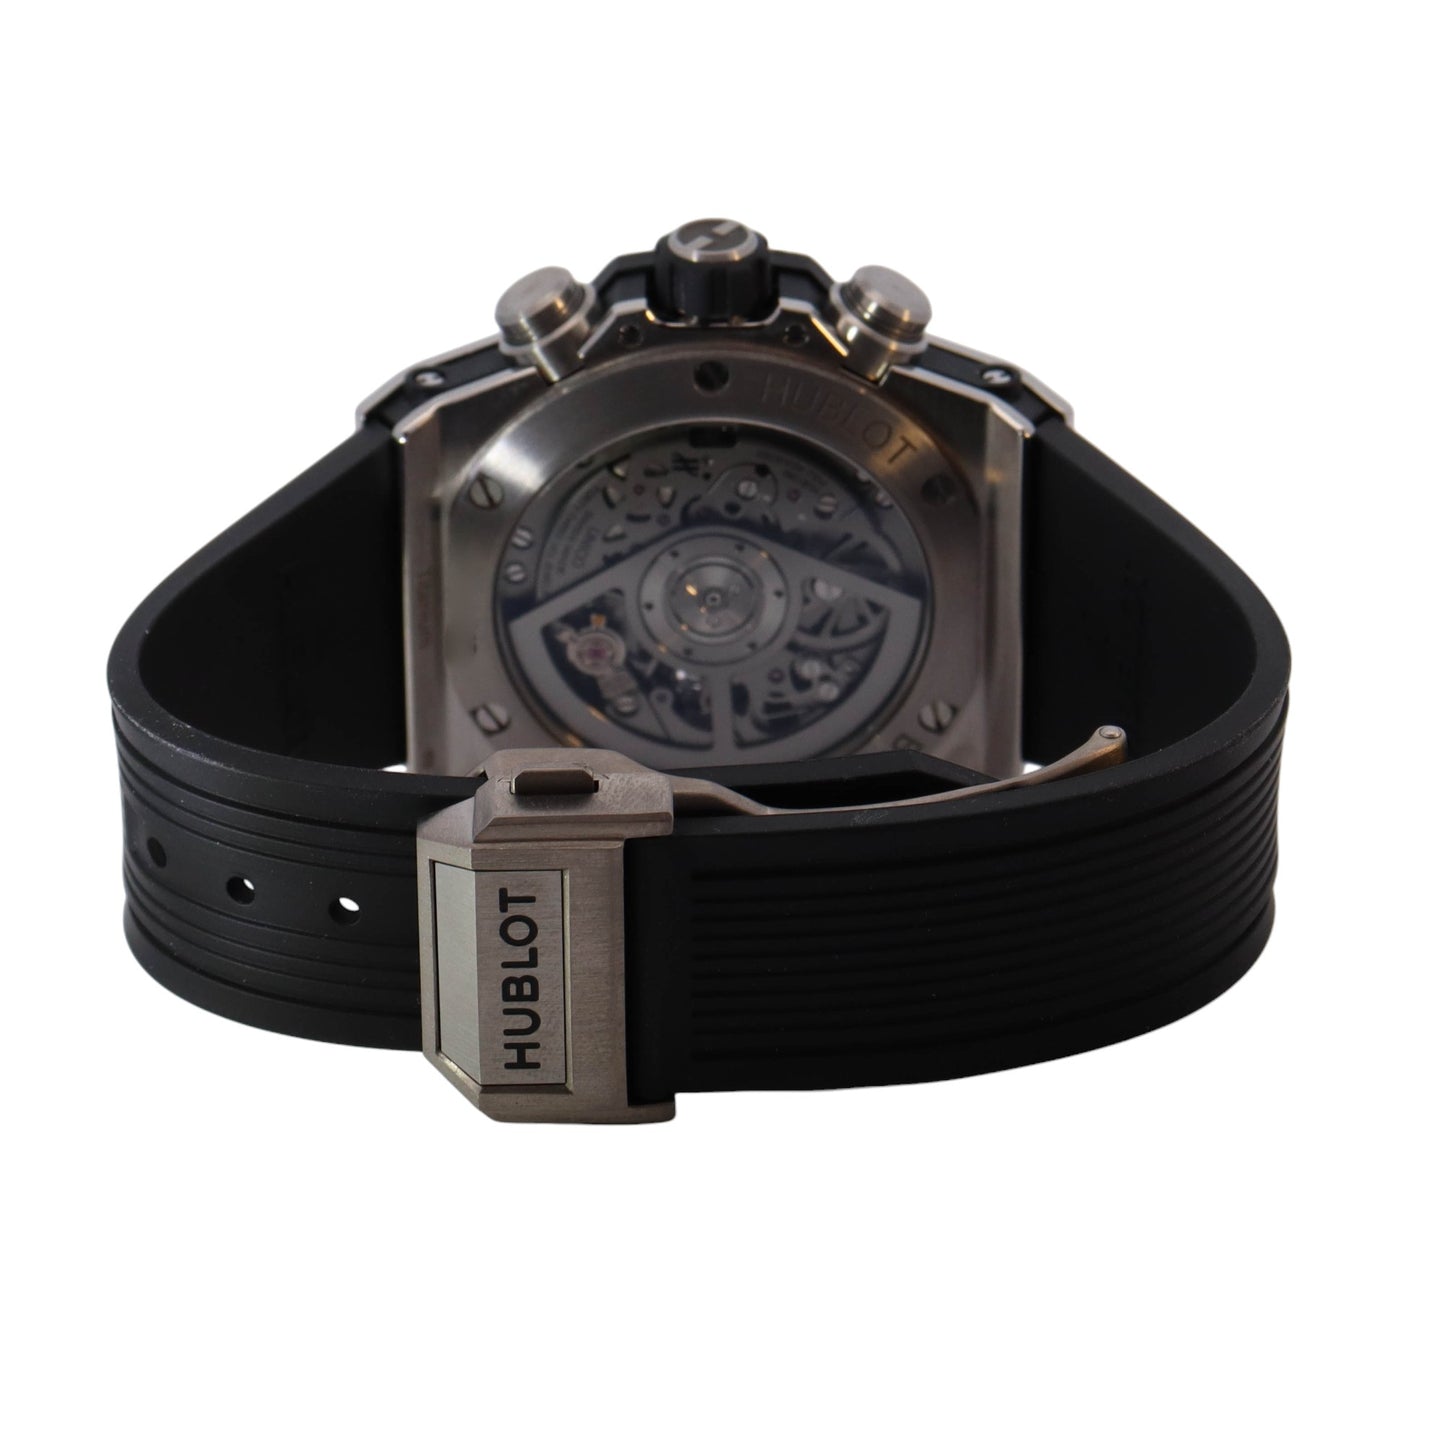 Hublot Big Bang Titanium Custom "Iced Out" 42mm Skeleton Dial Watch Ref# 441.NX.1171.RX